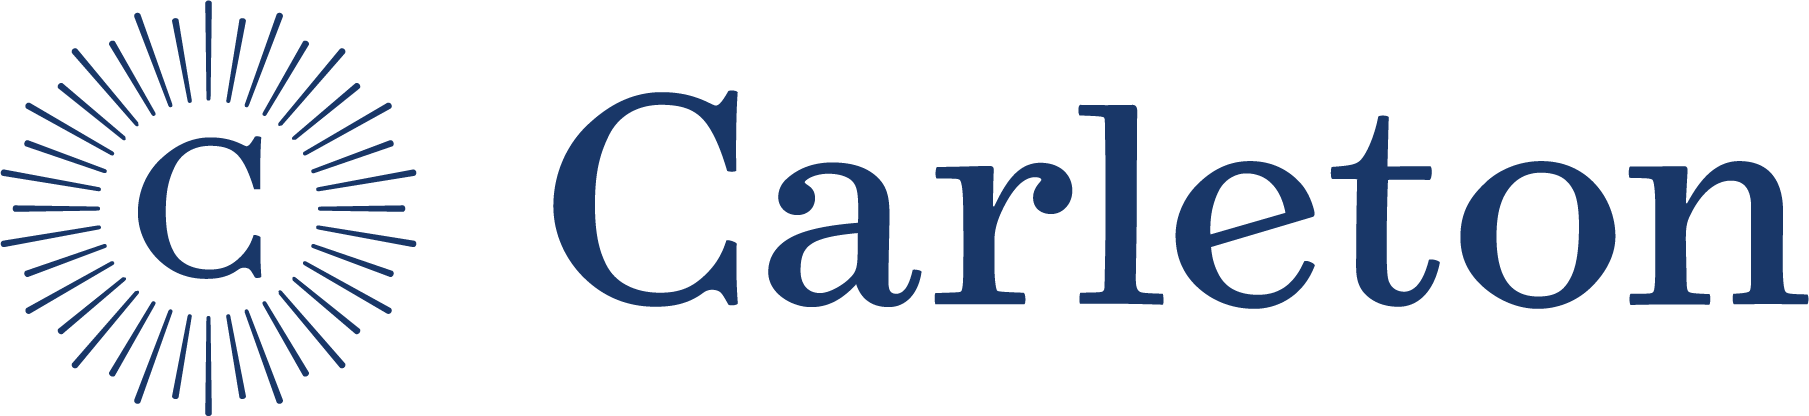 Carleton wordmark